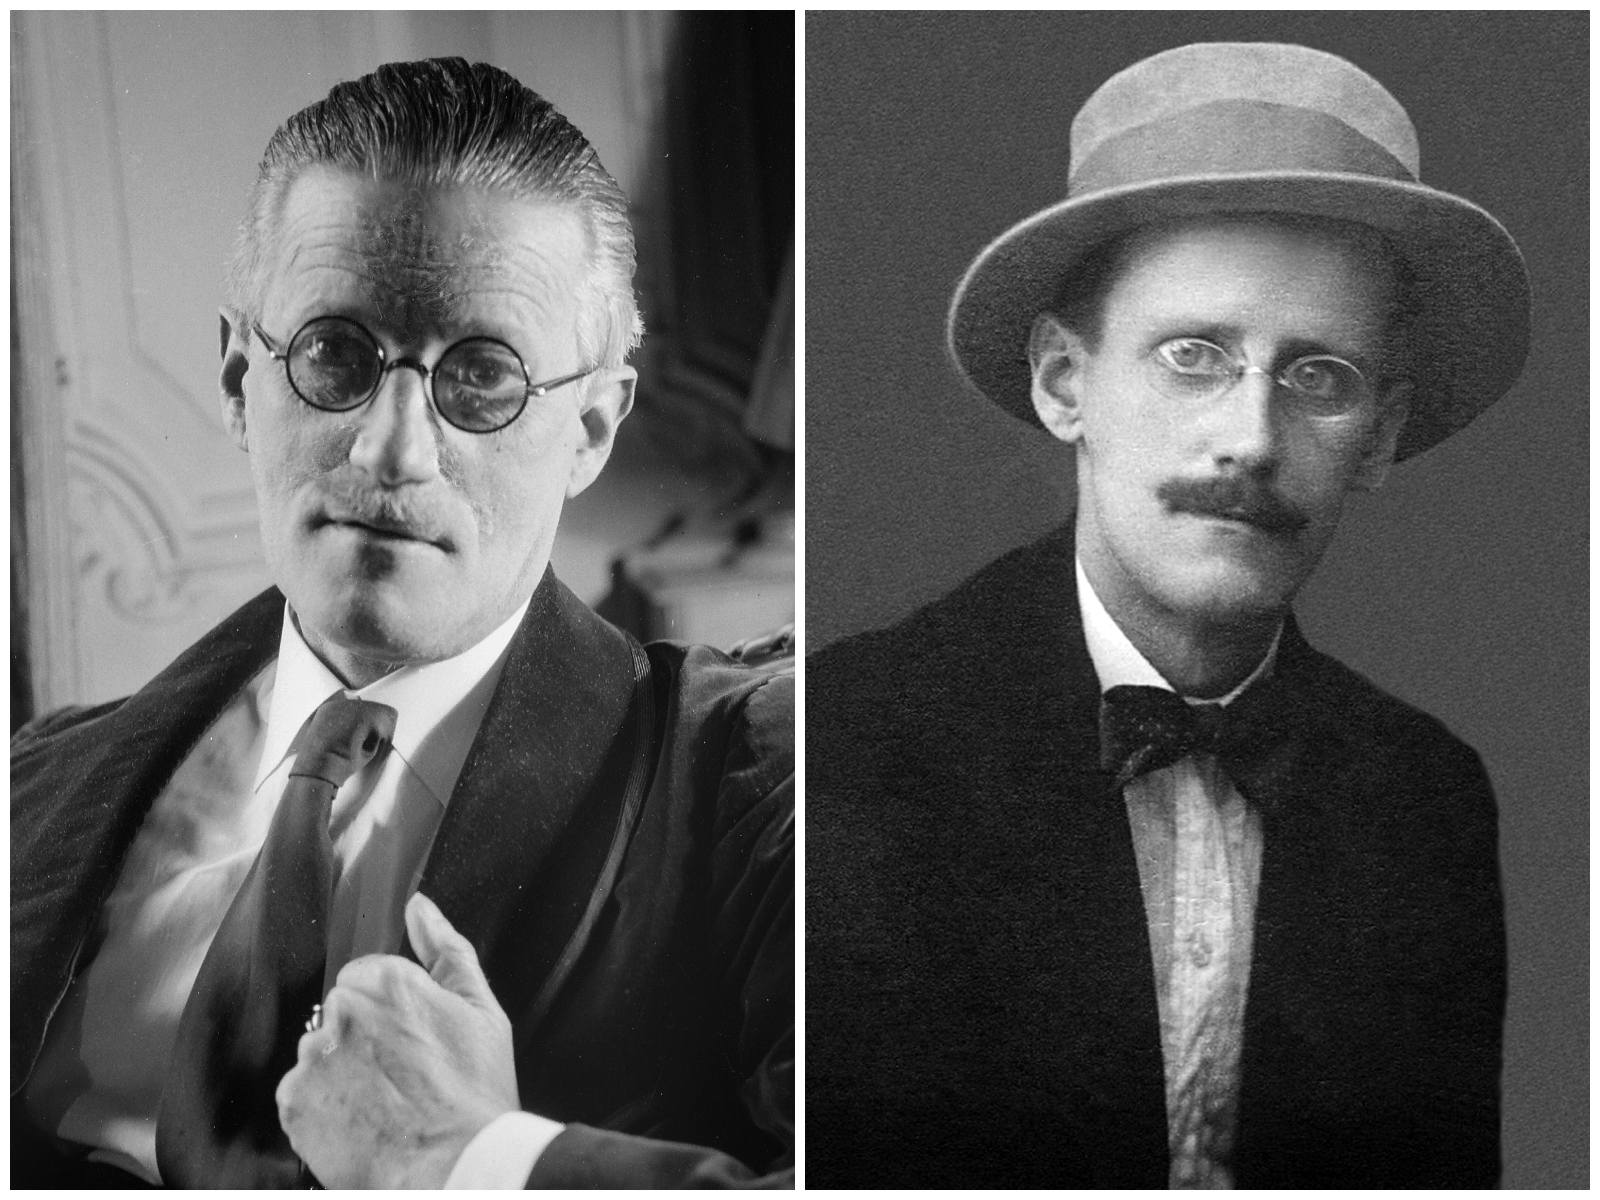 A photo and portrait of James Joyce